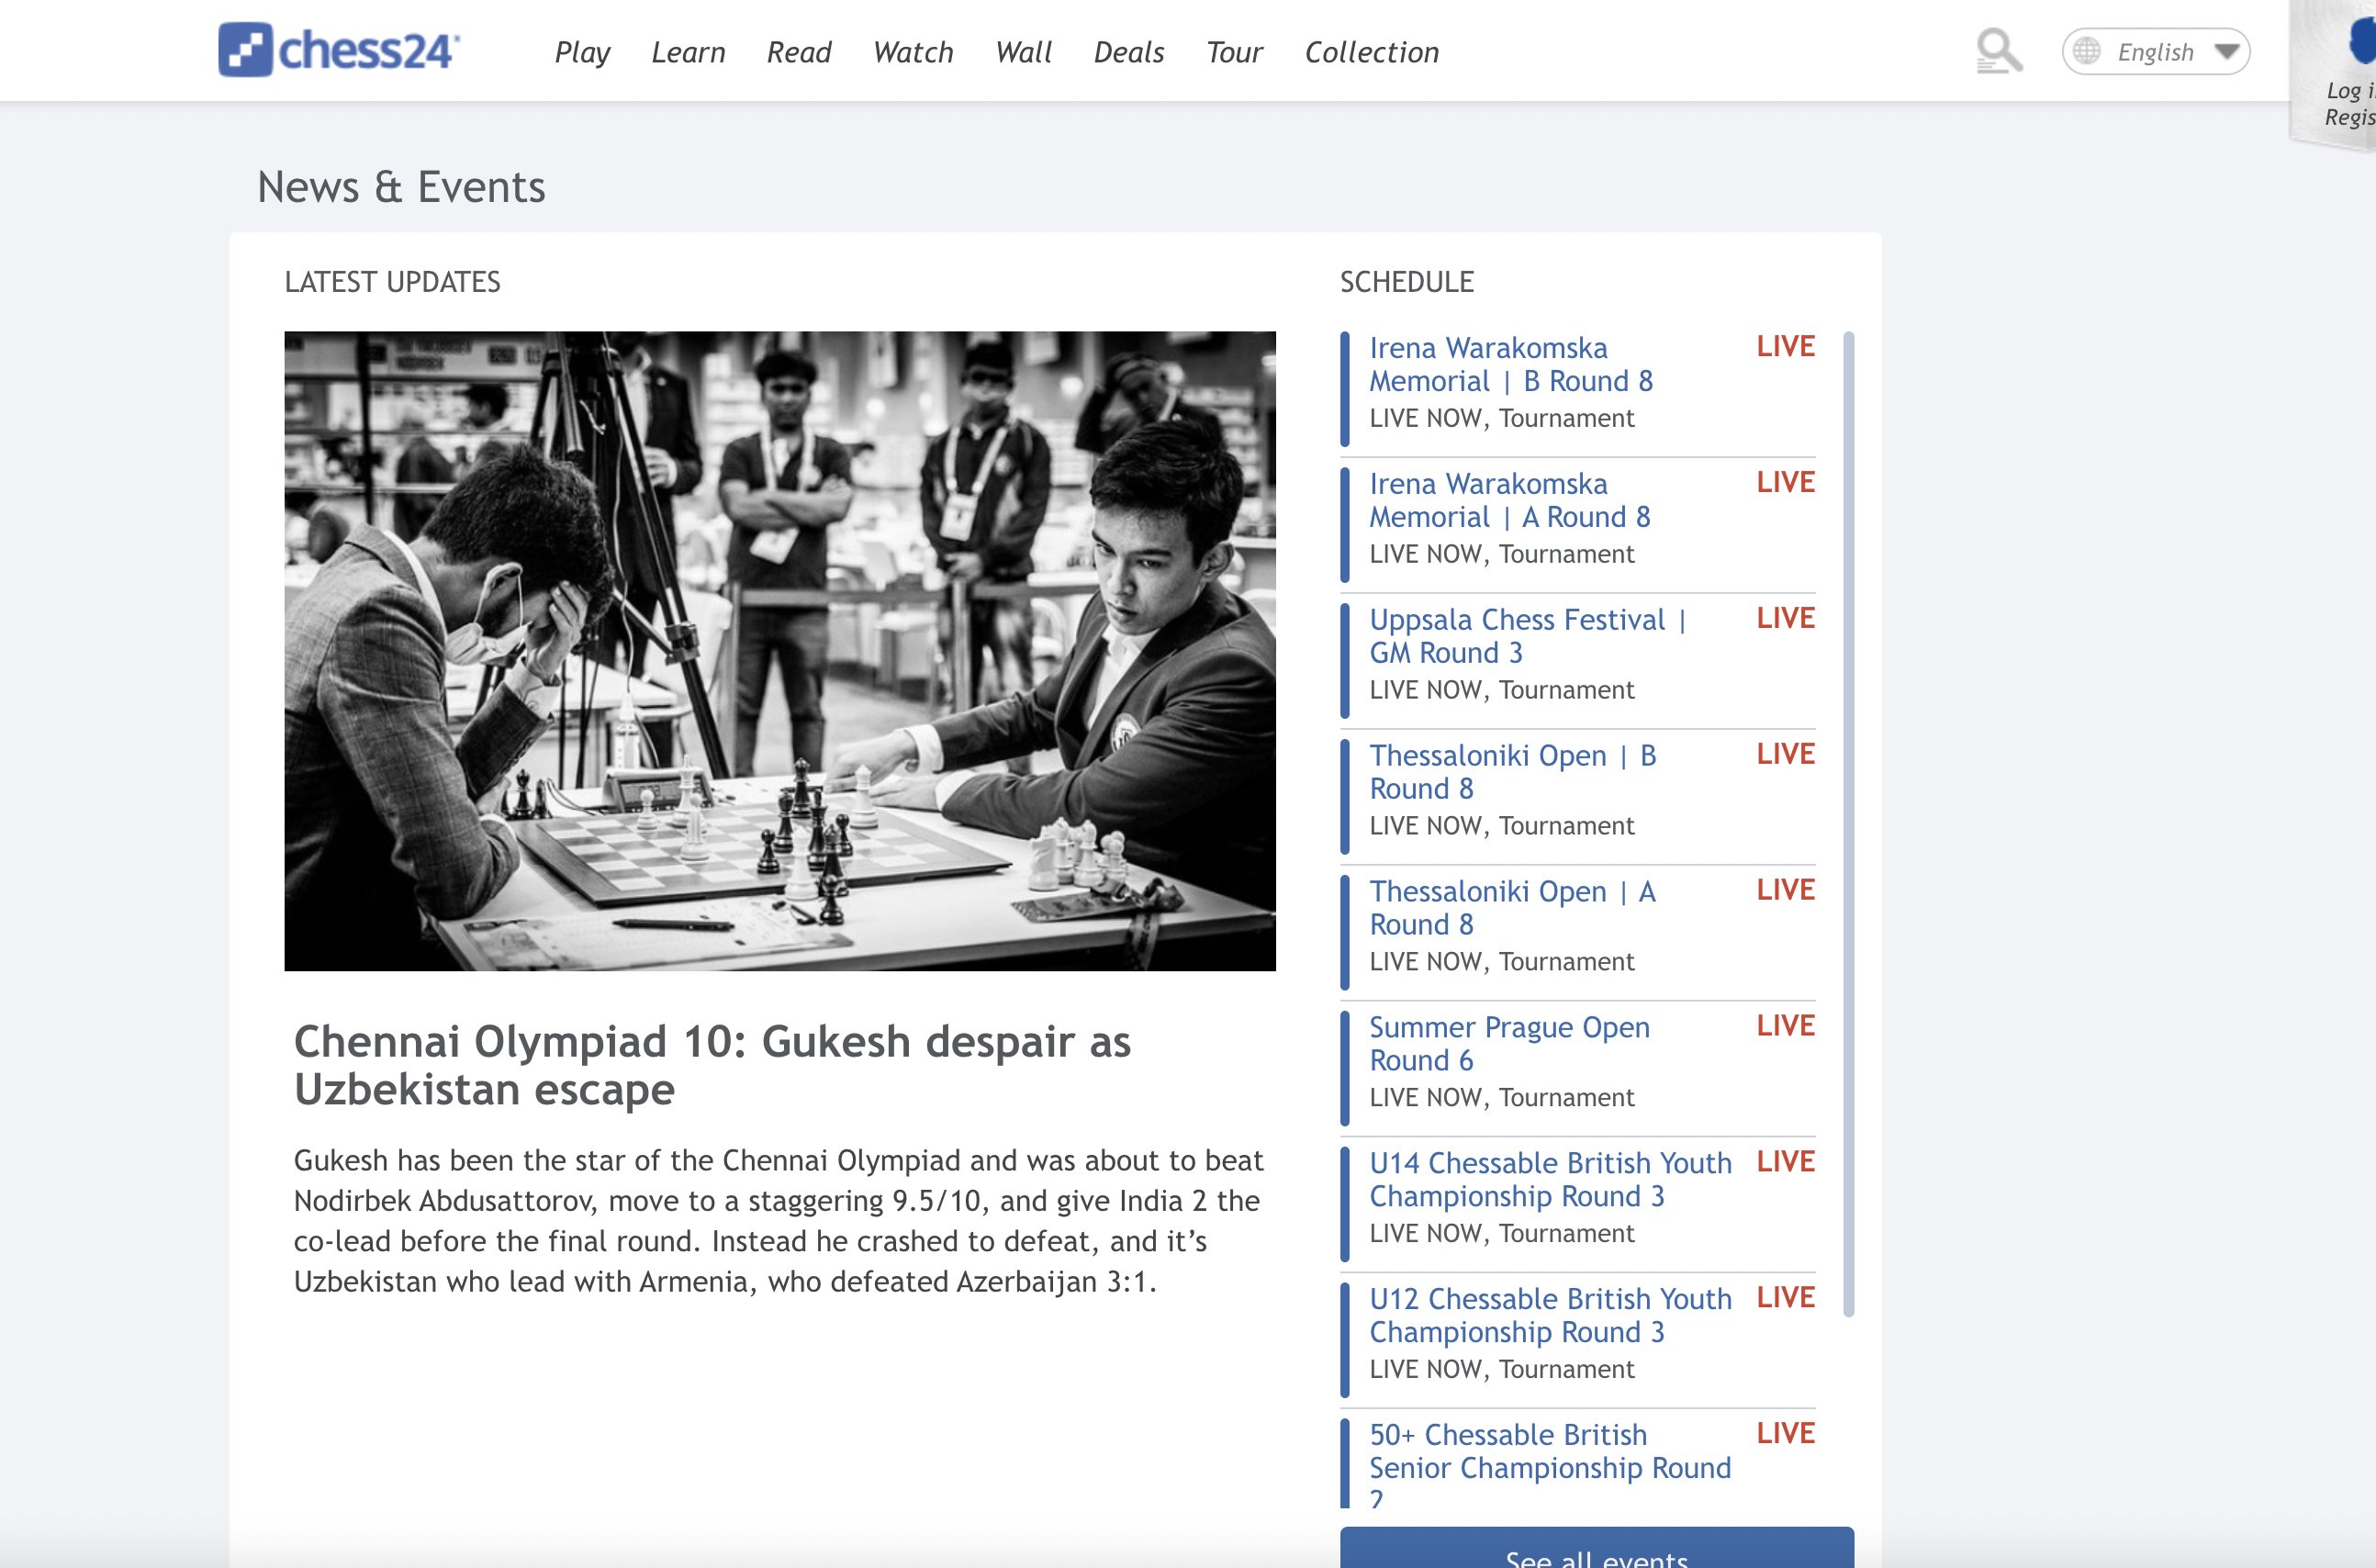 Chennai Olympiad 10: Gukesh despair as Uzbekistan escape